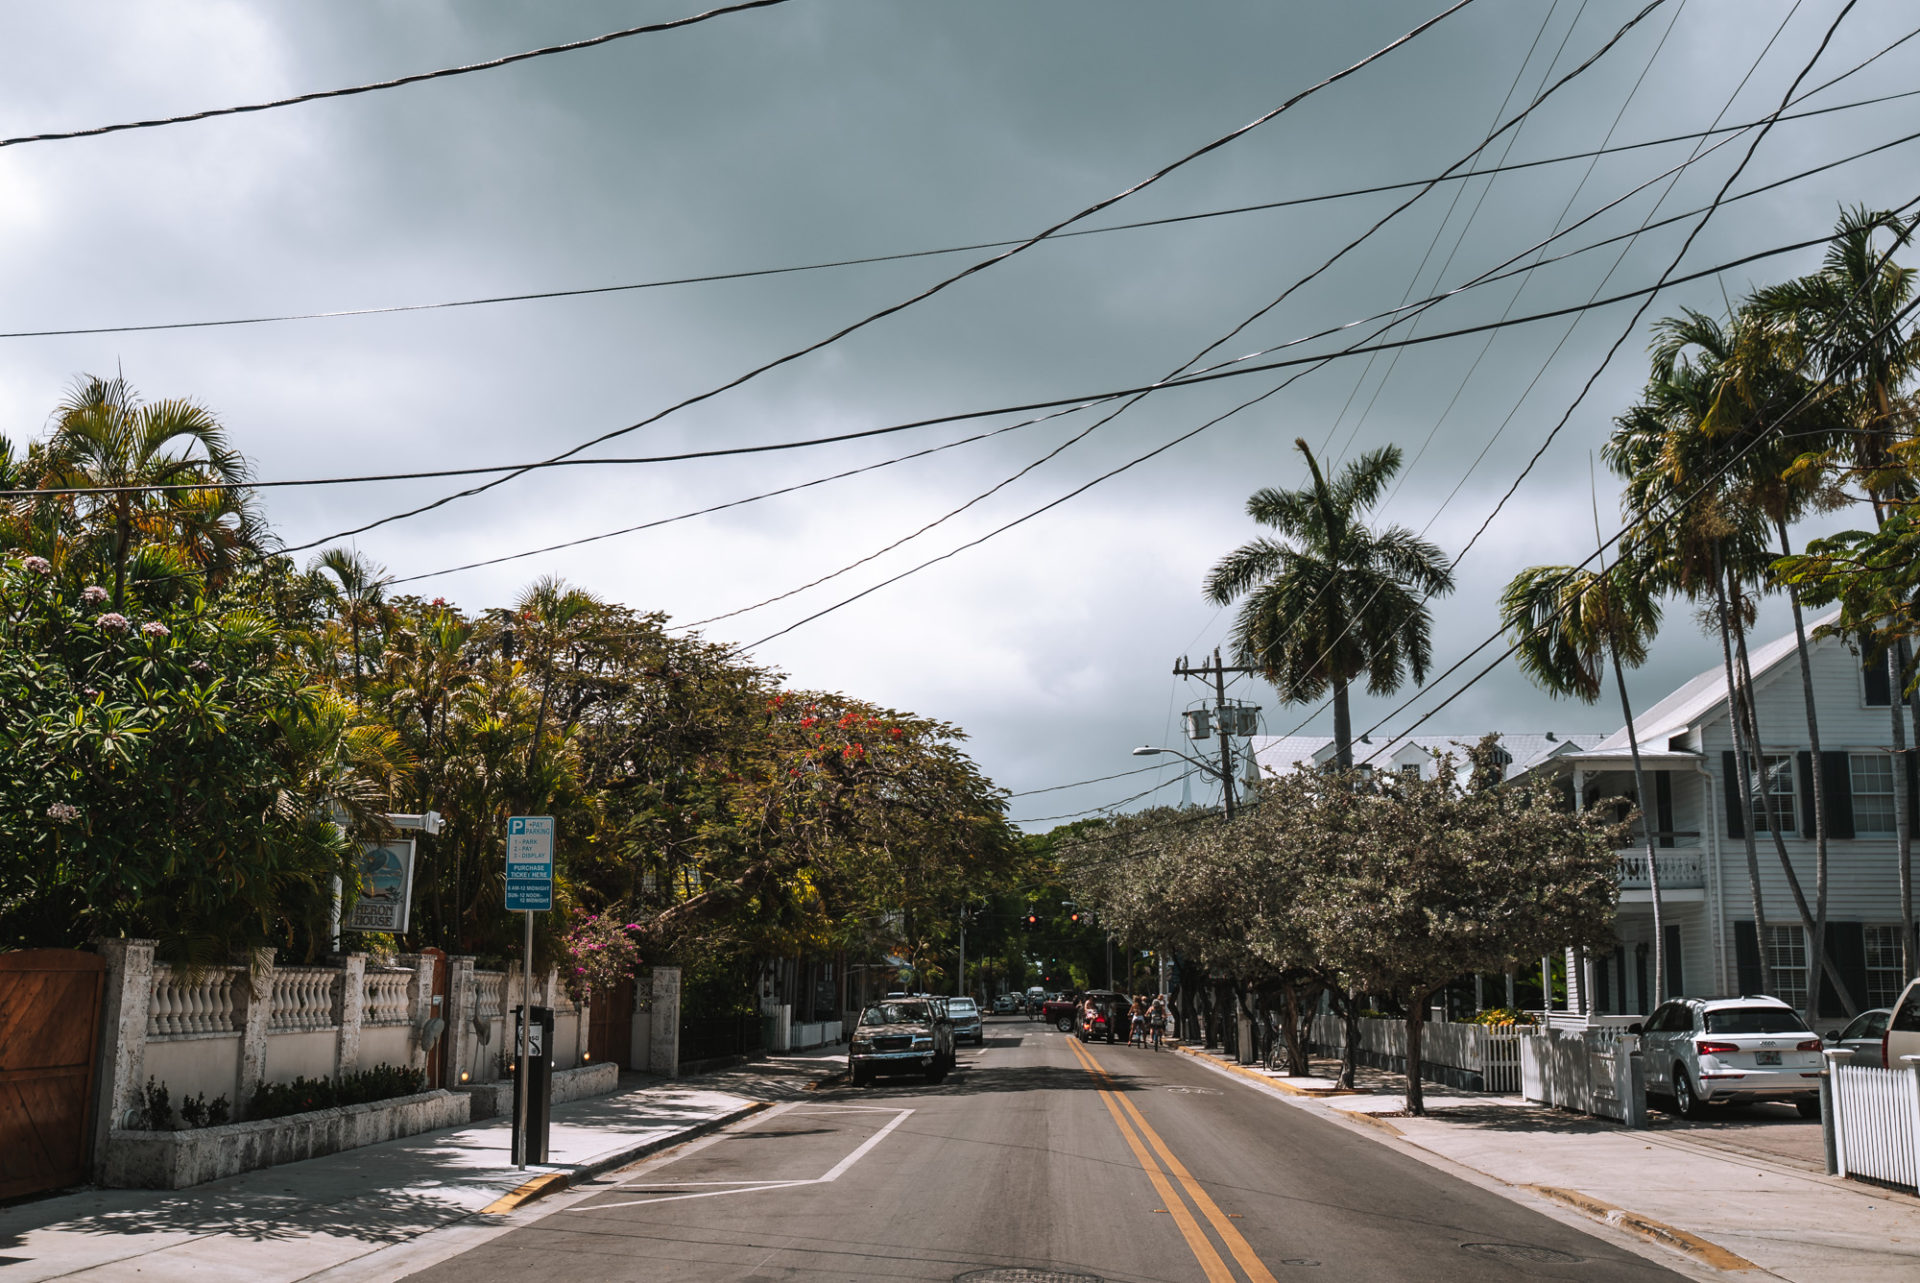 A street in downtown Key West